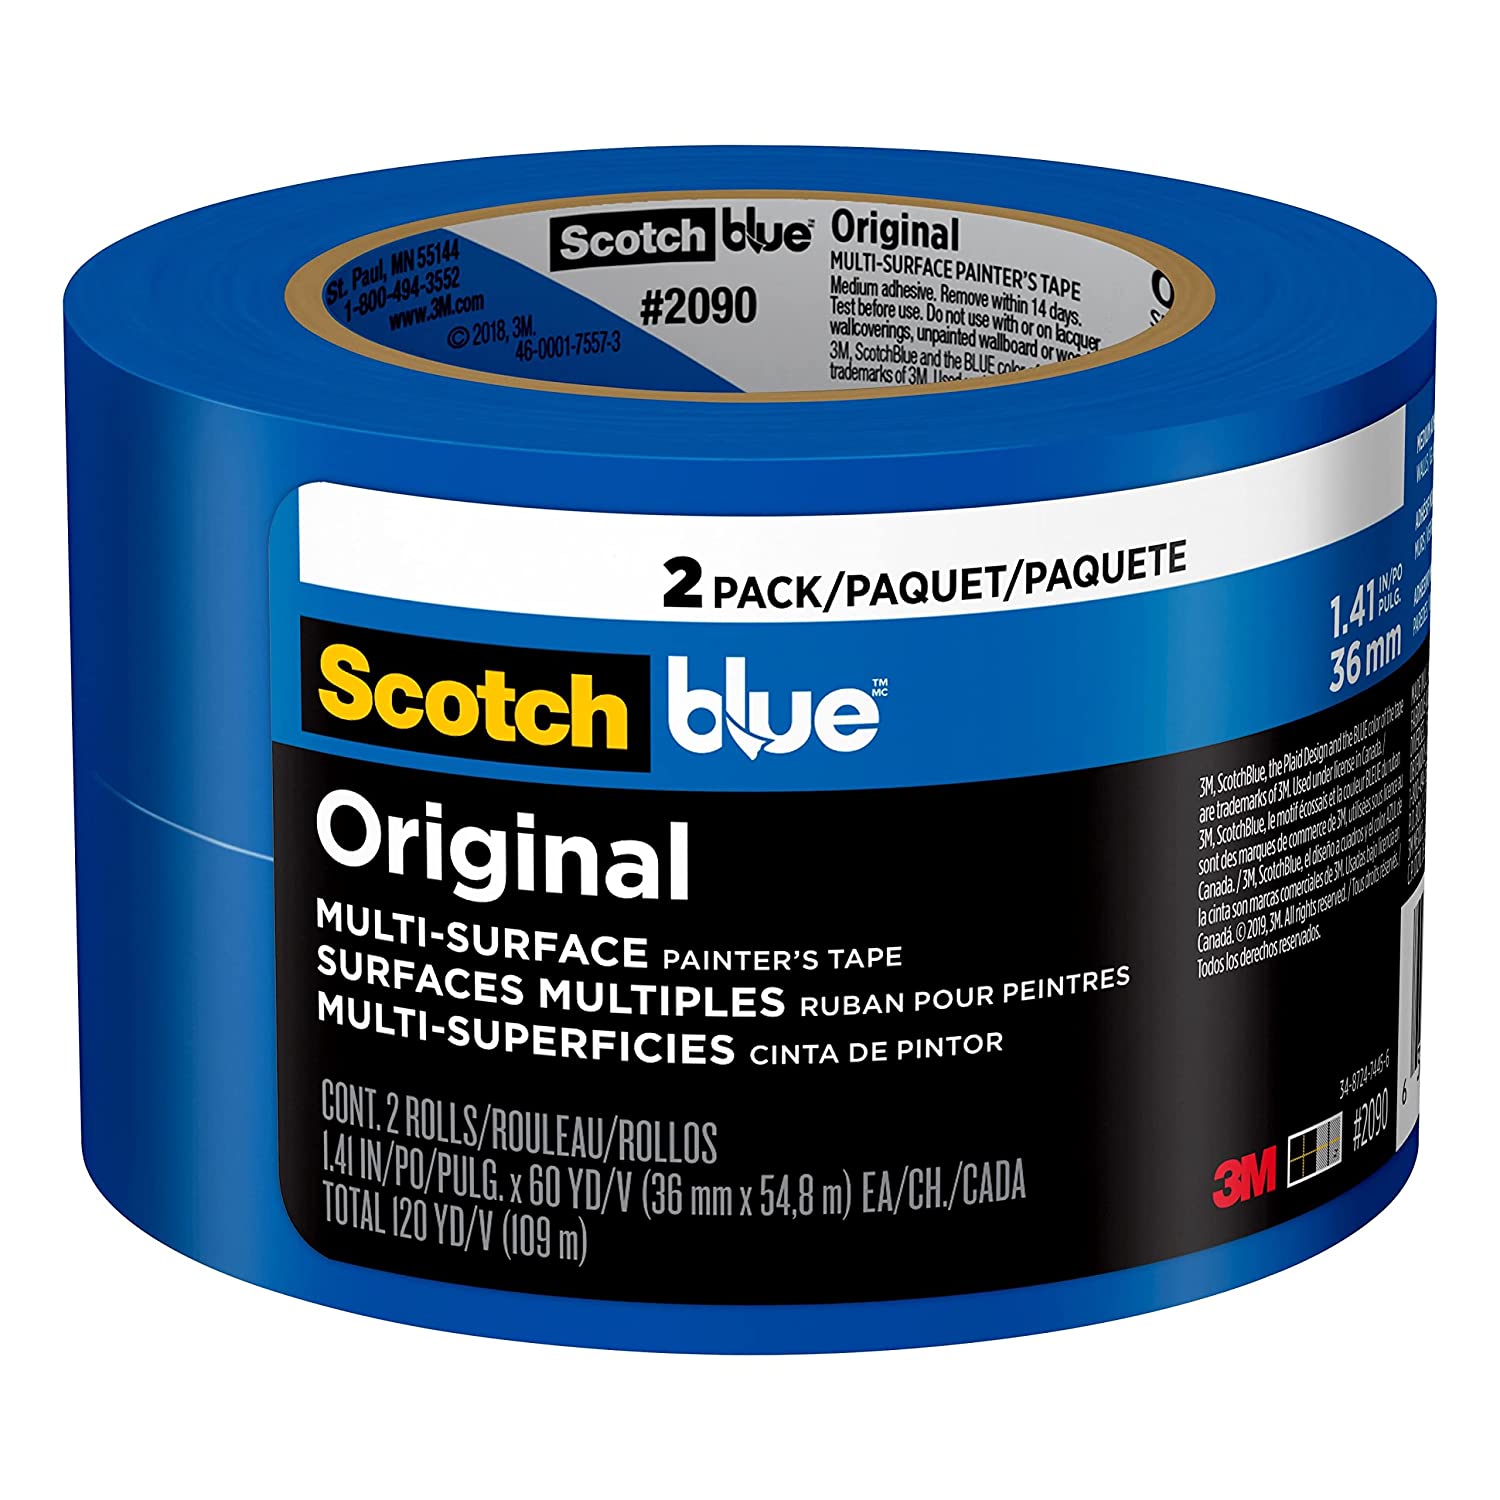 Scotch Blue Original Multi-Surface Painter’s Tape Logo